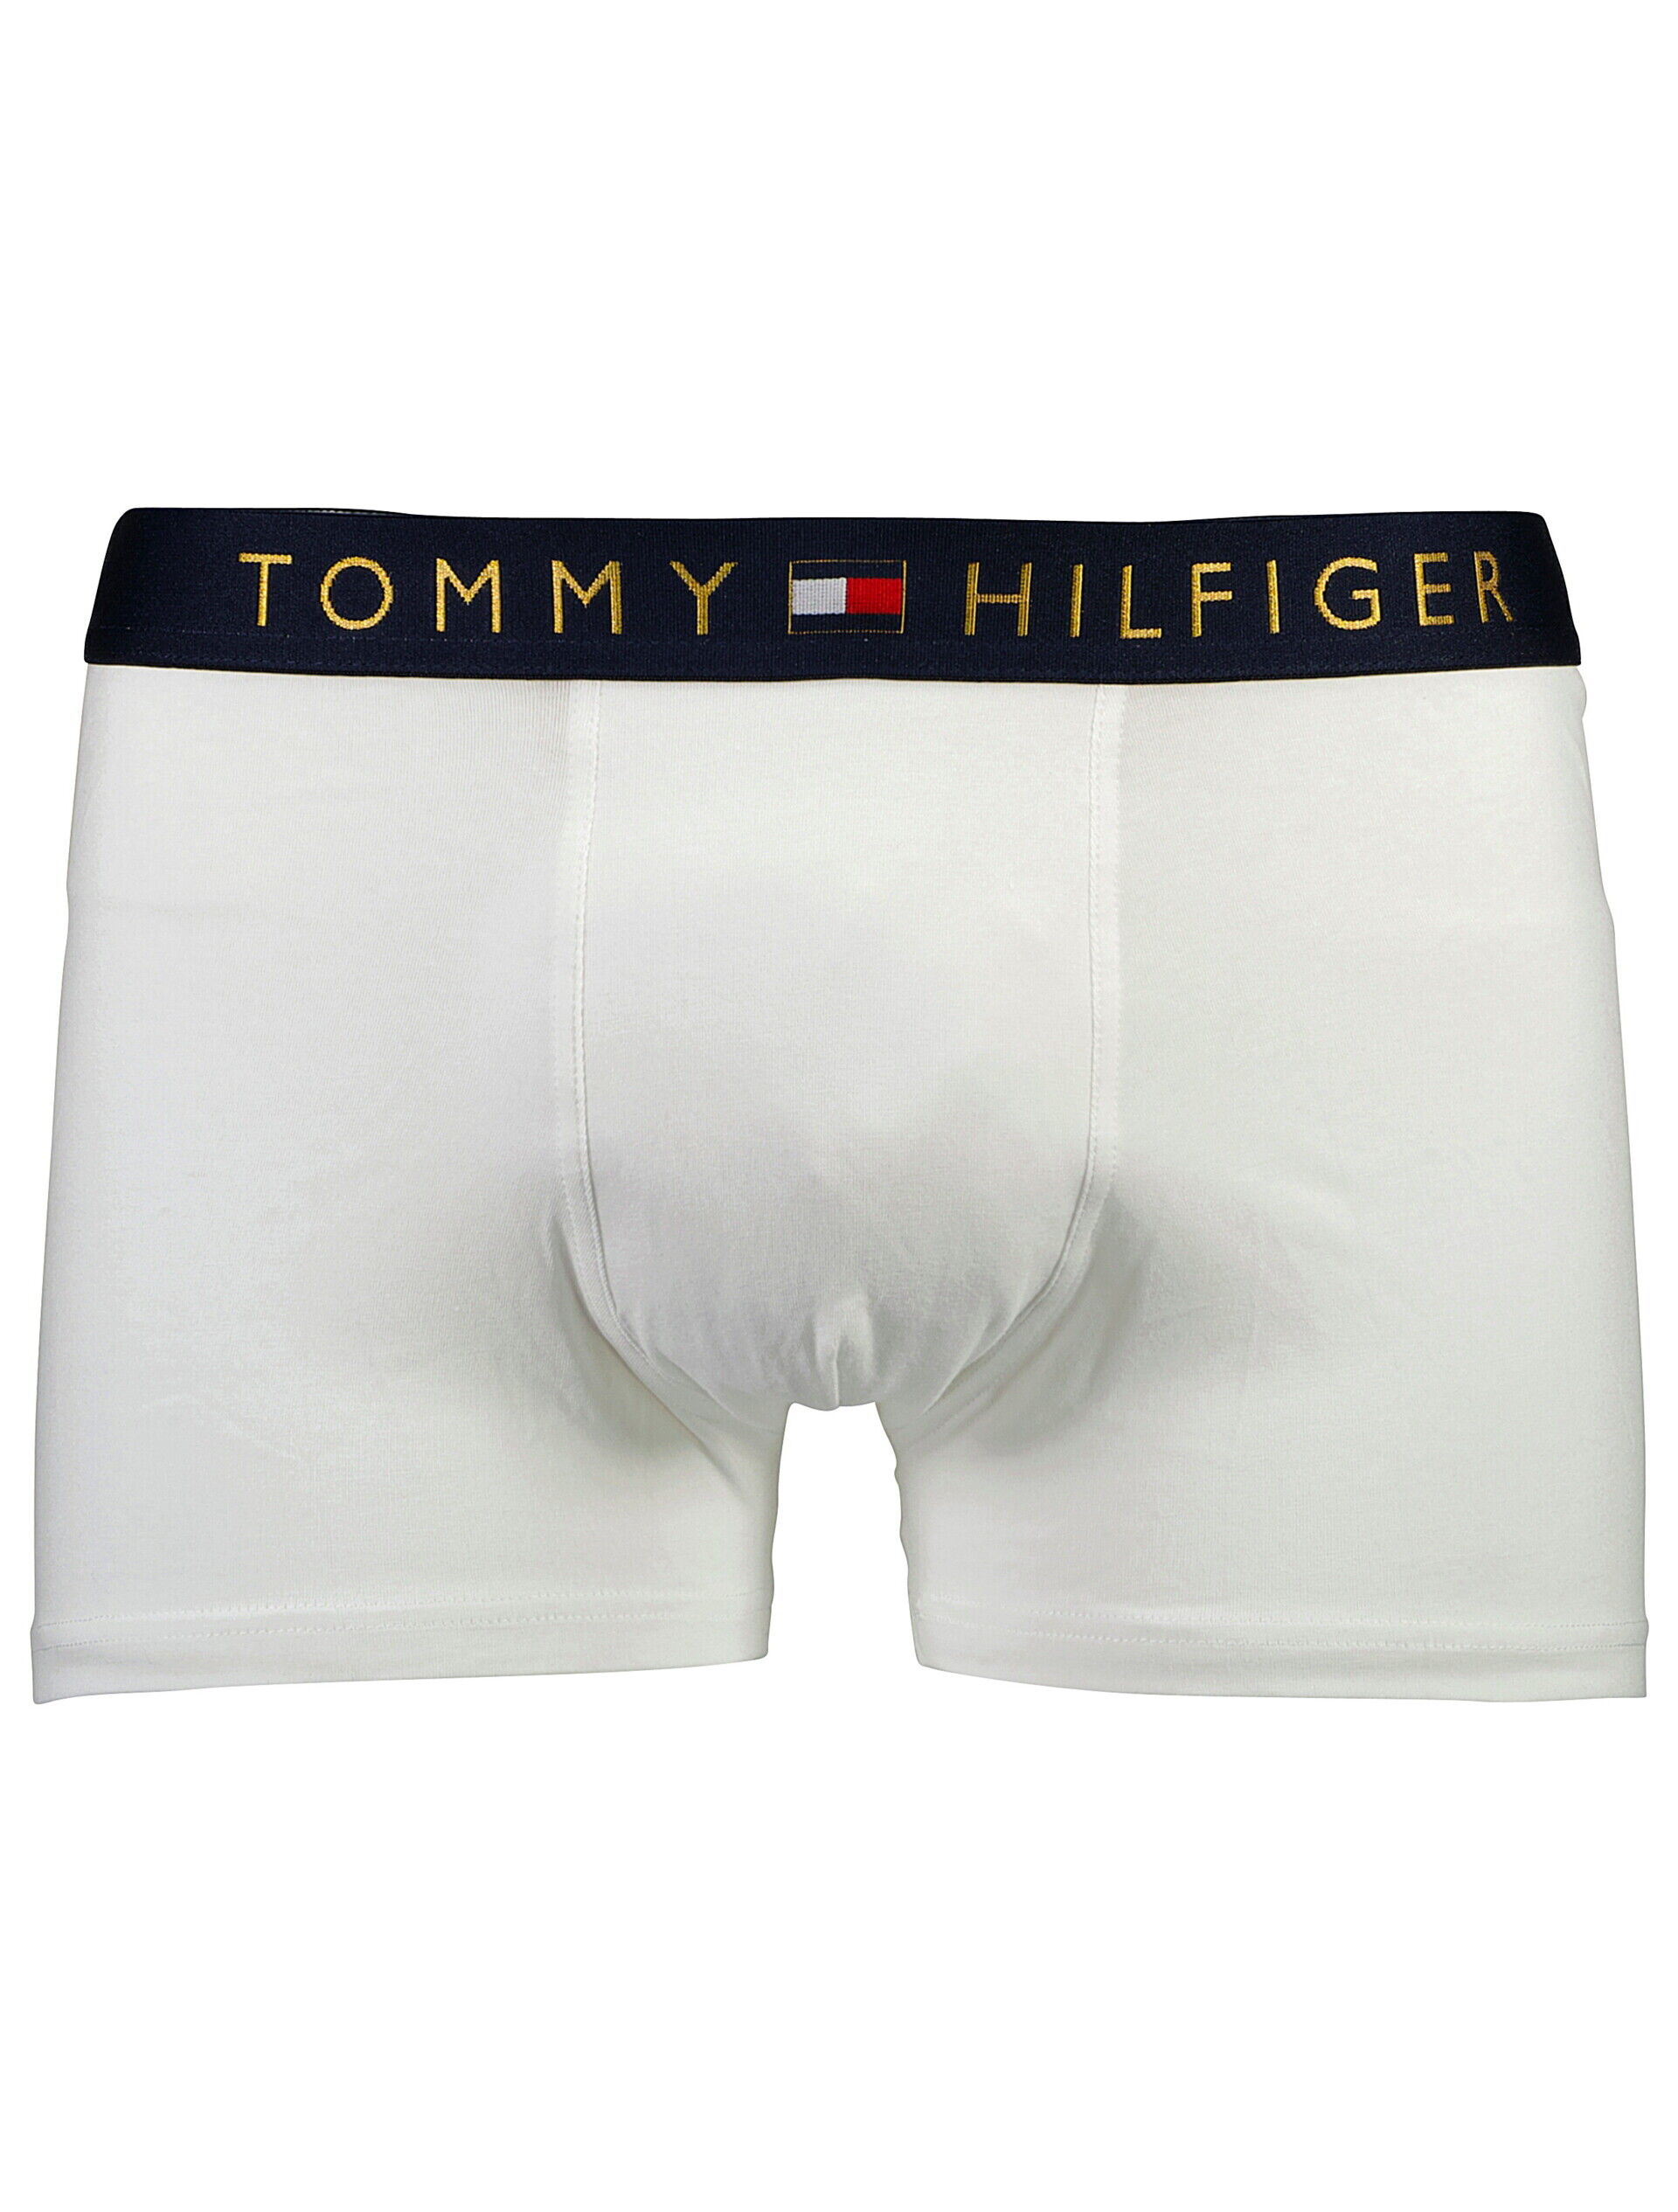 Tommy Hilfiger  Tights 90-900795